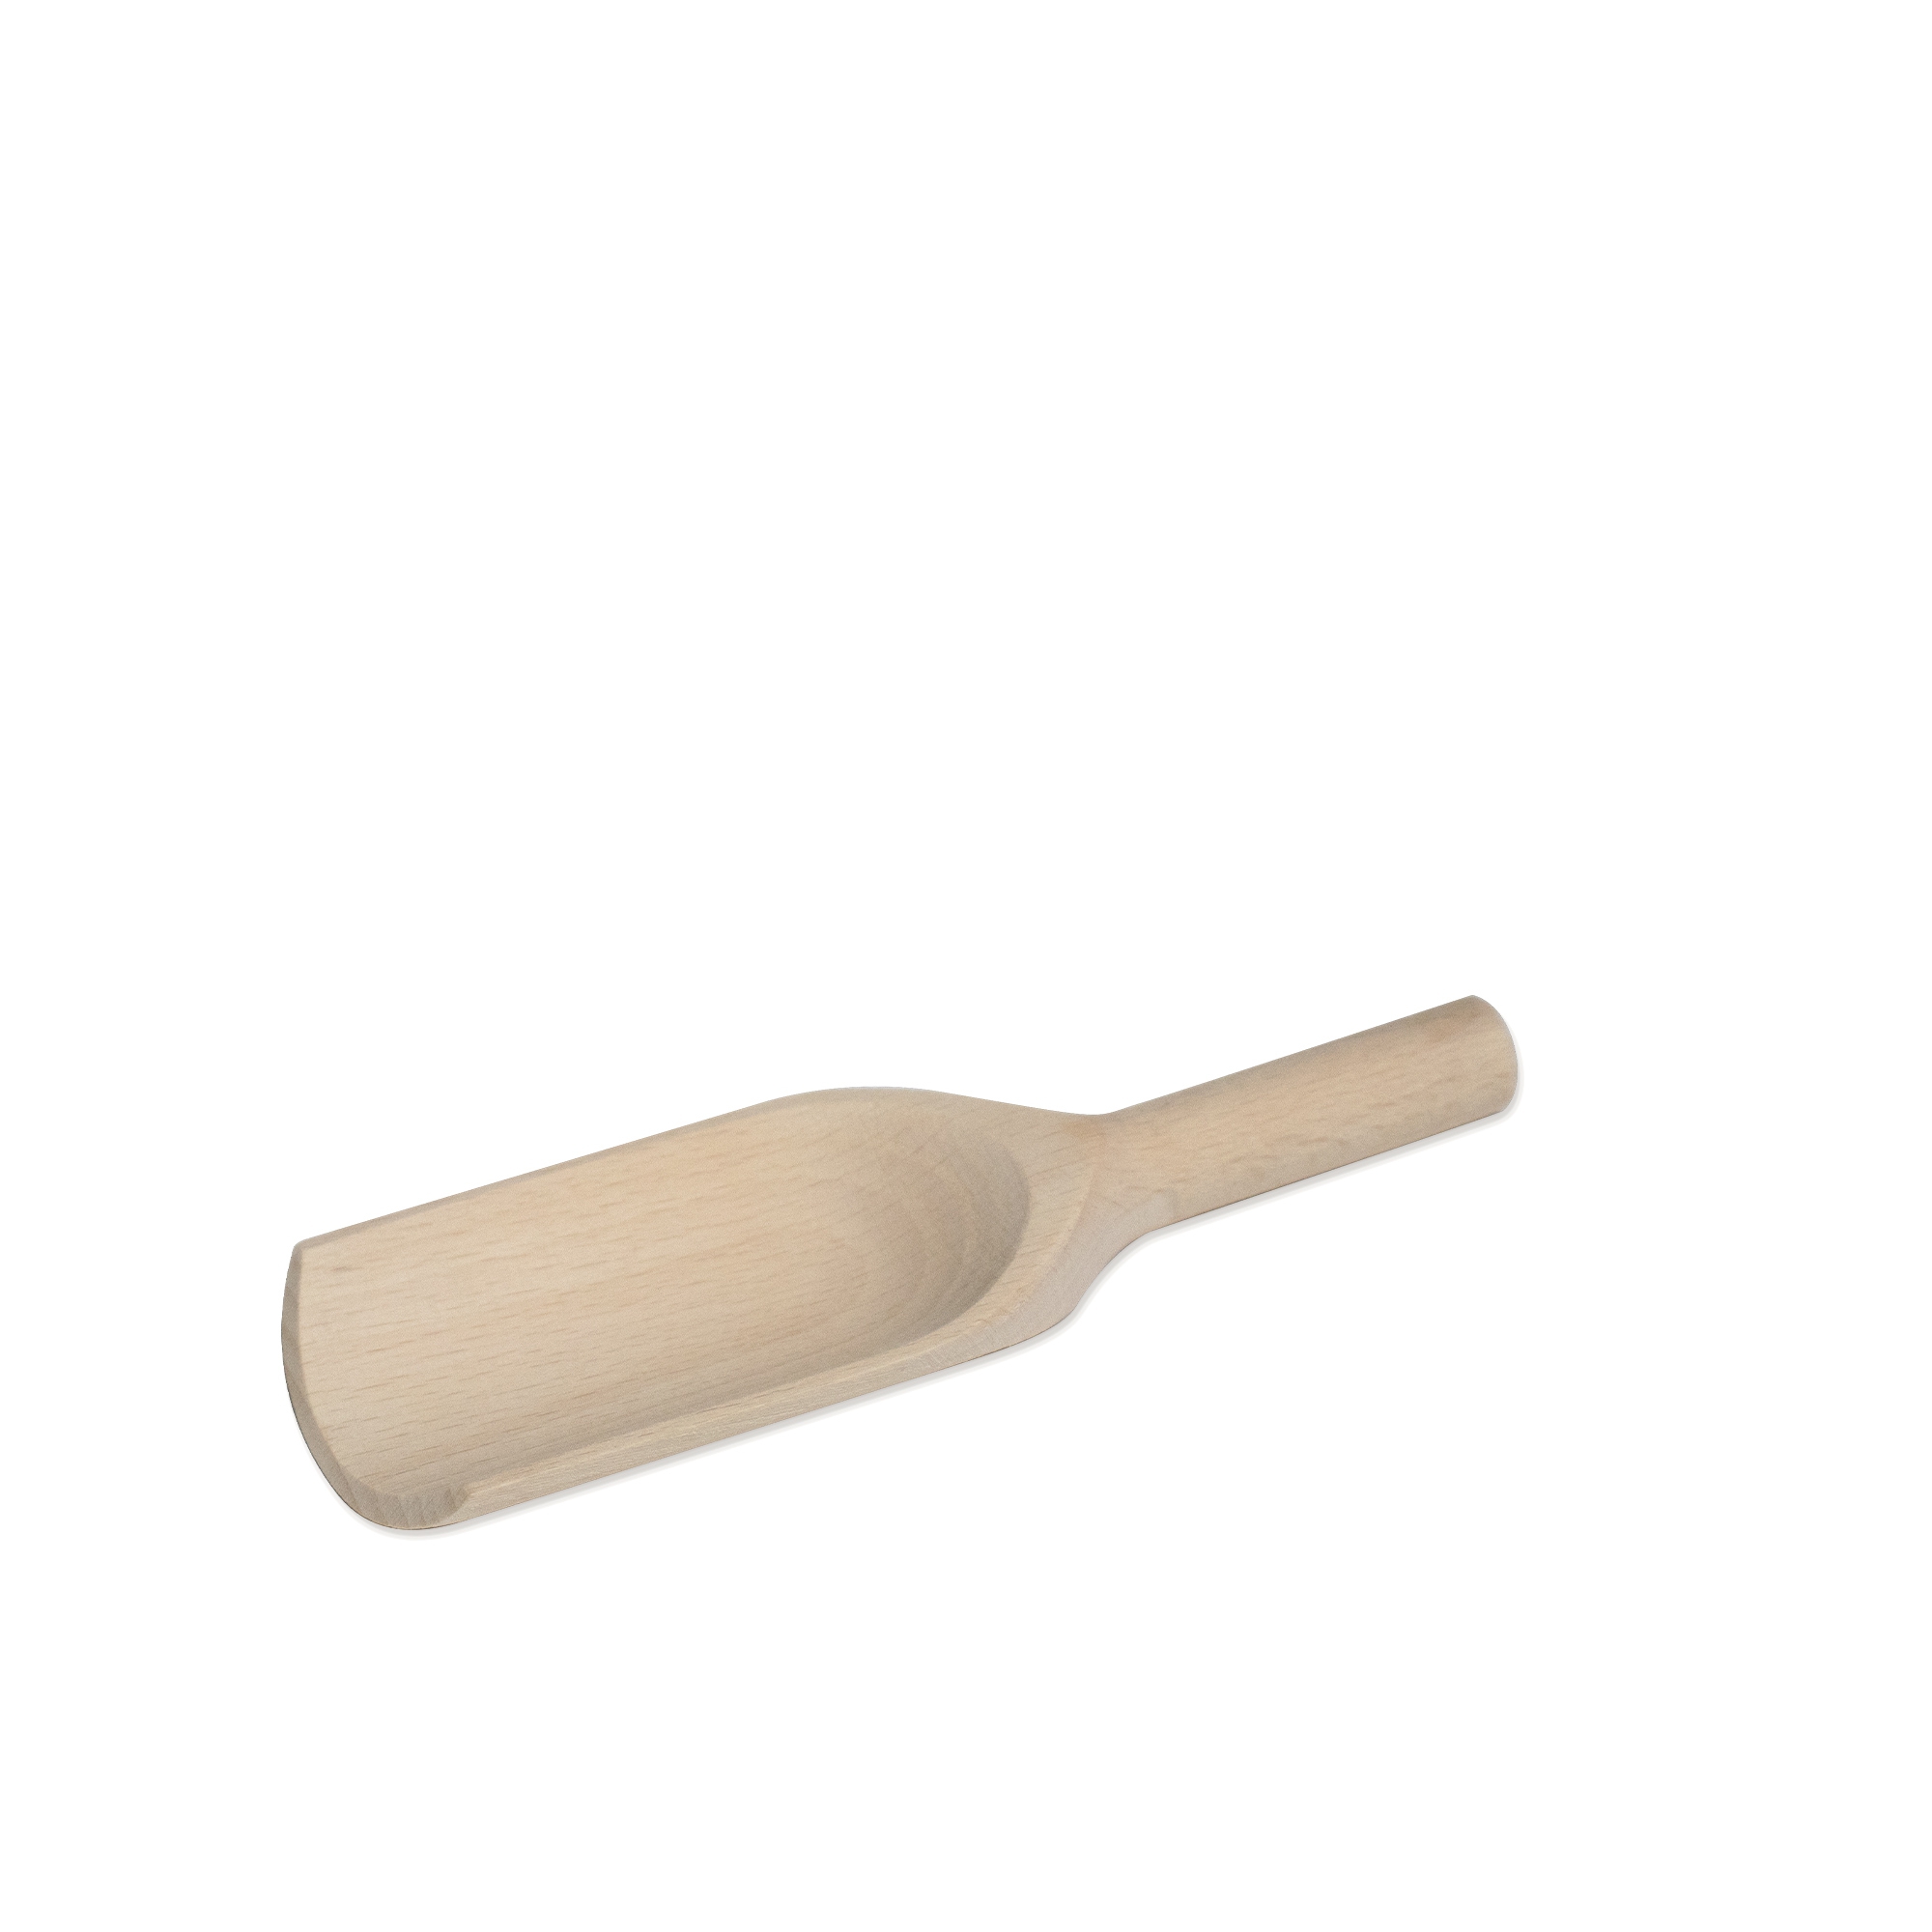 Culinaris - Shovel, flat 14 cm Culinaris